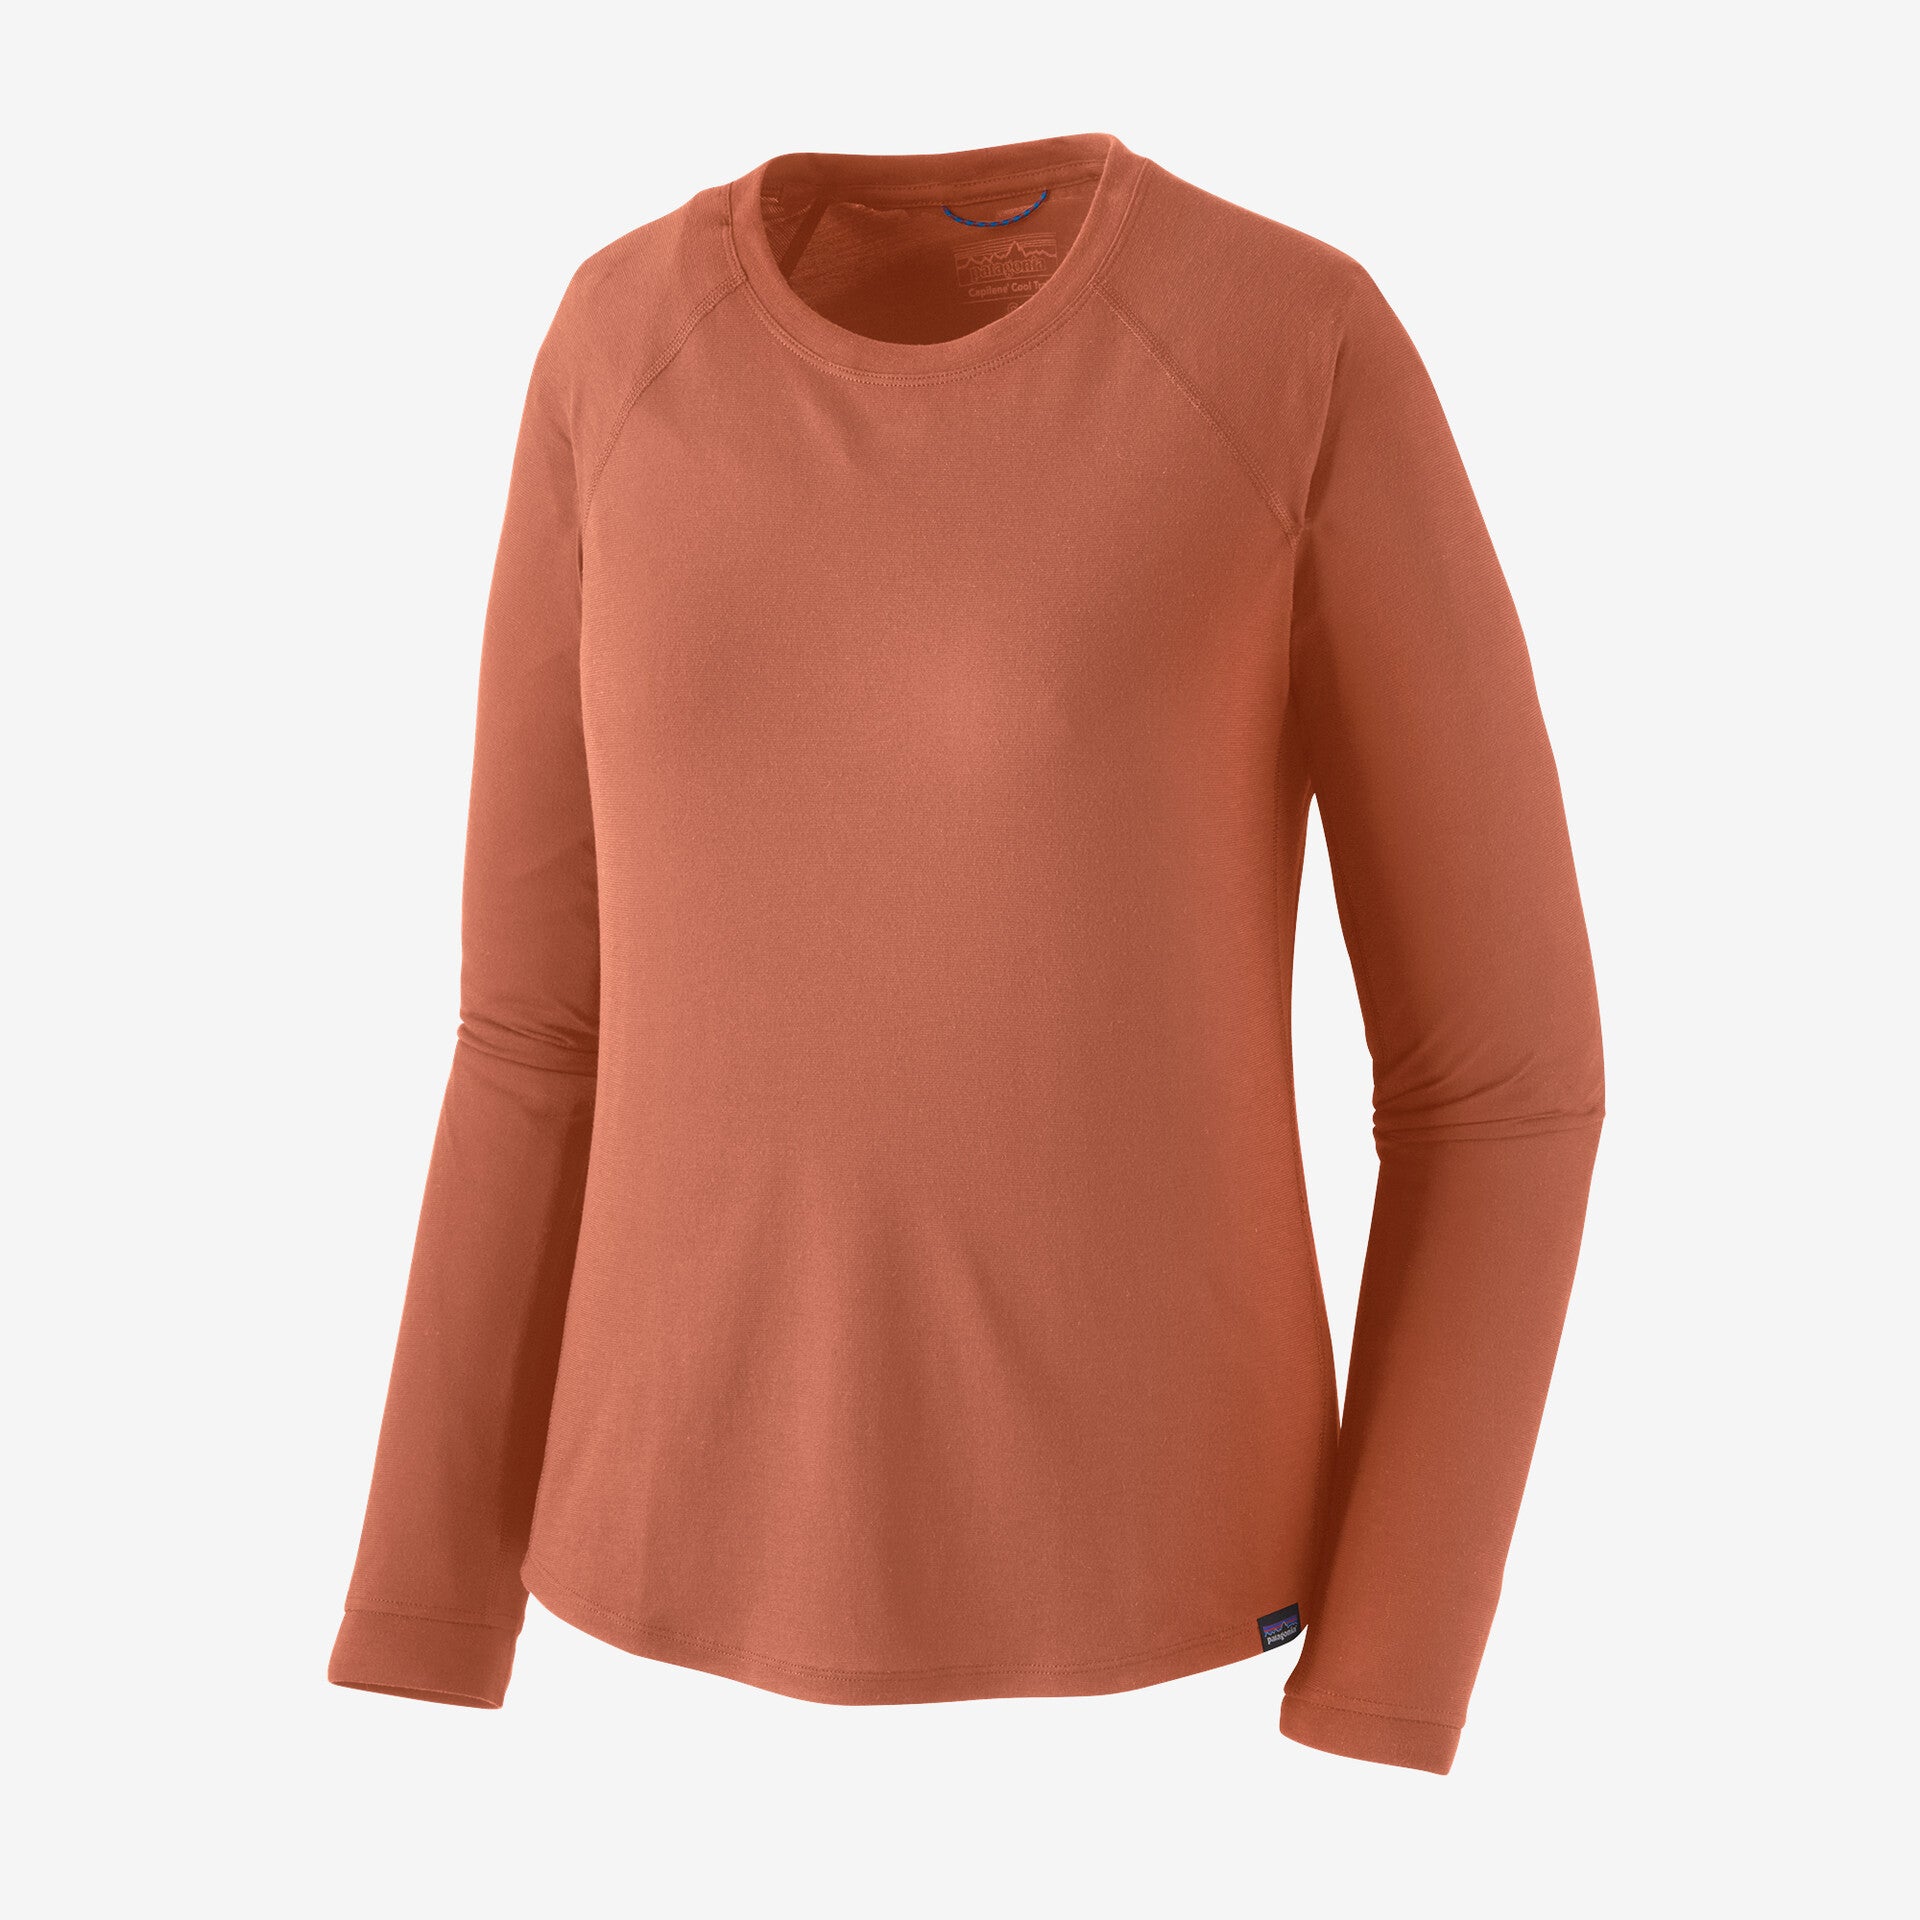 PATAGONIA Long-Sleeved Capilene® Cool Trail Shirt - Men's